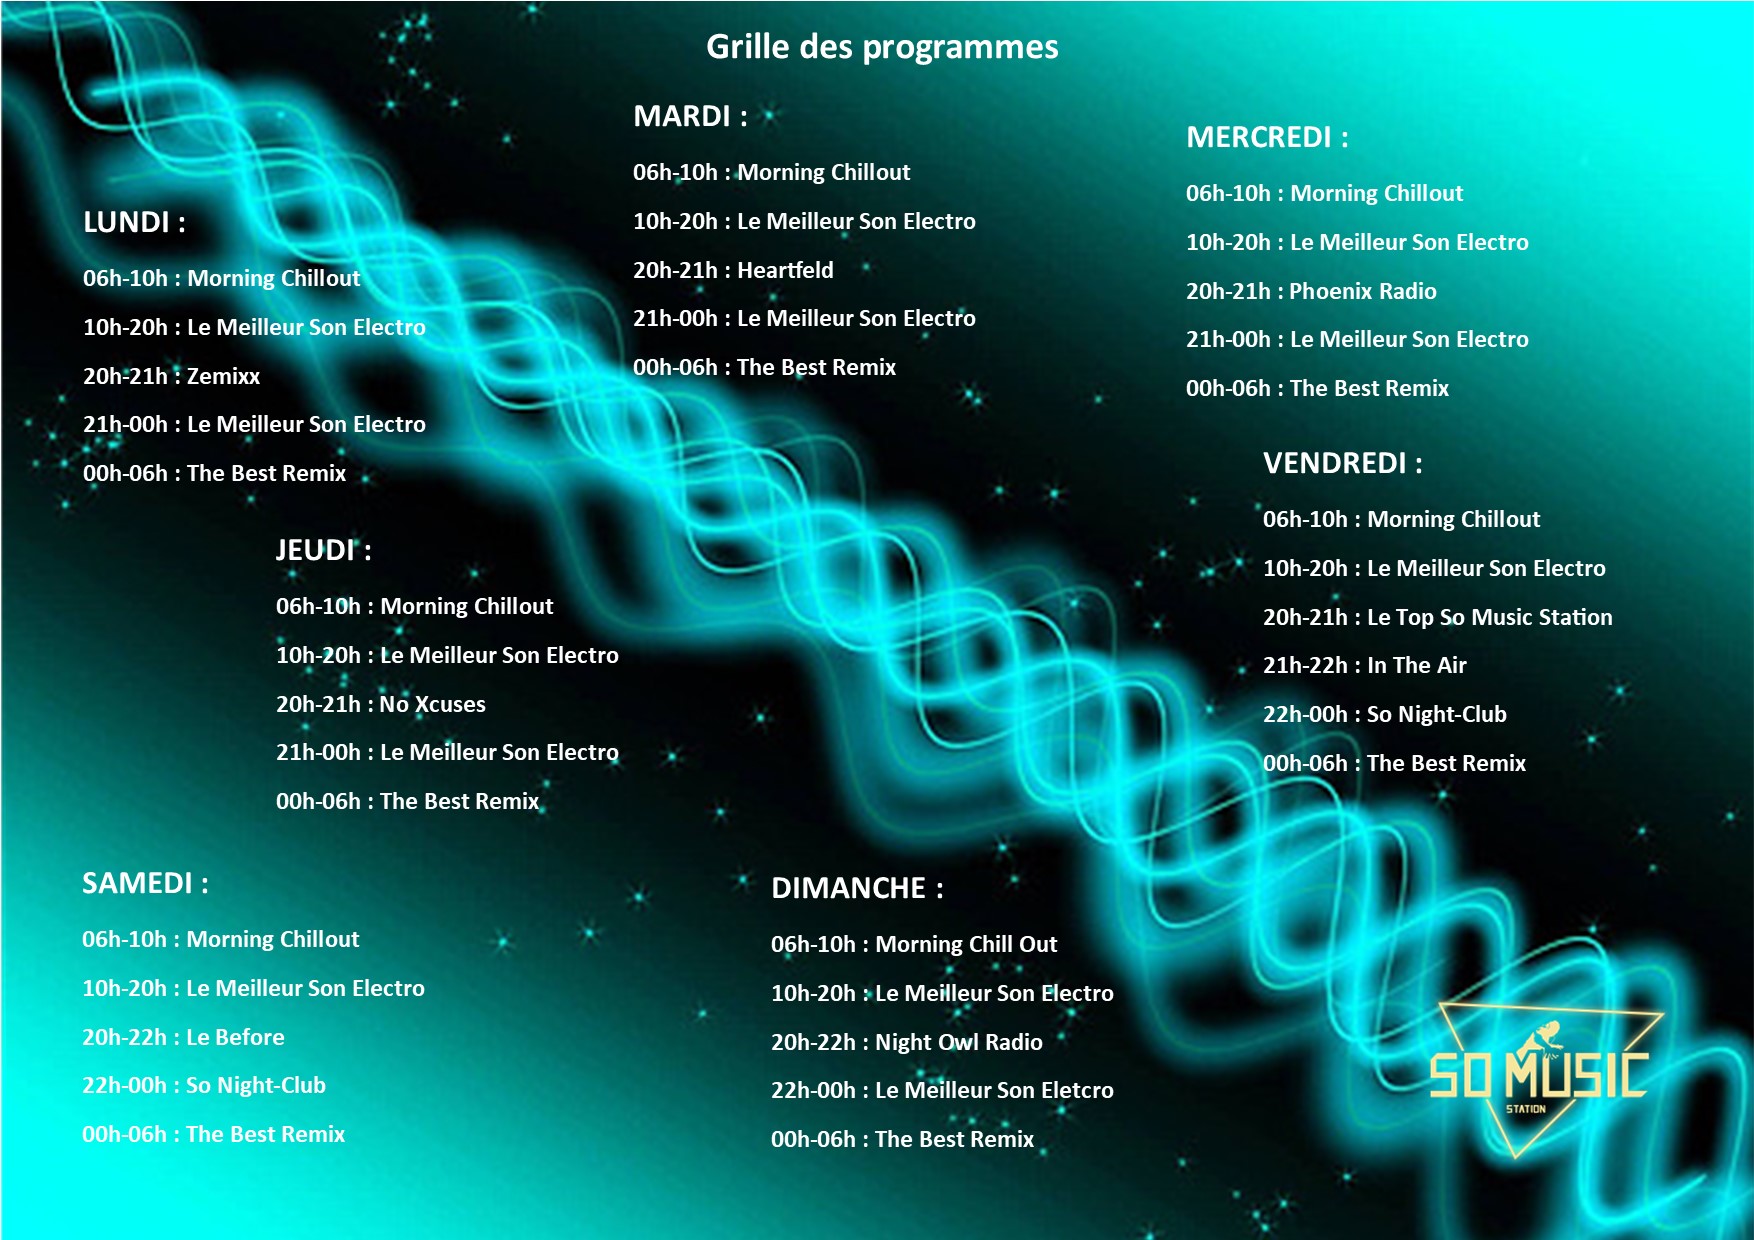 Grille programmes 2023 2024